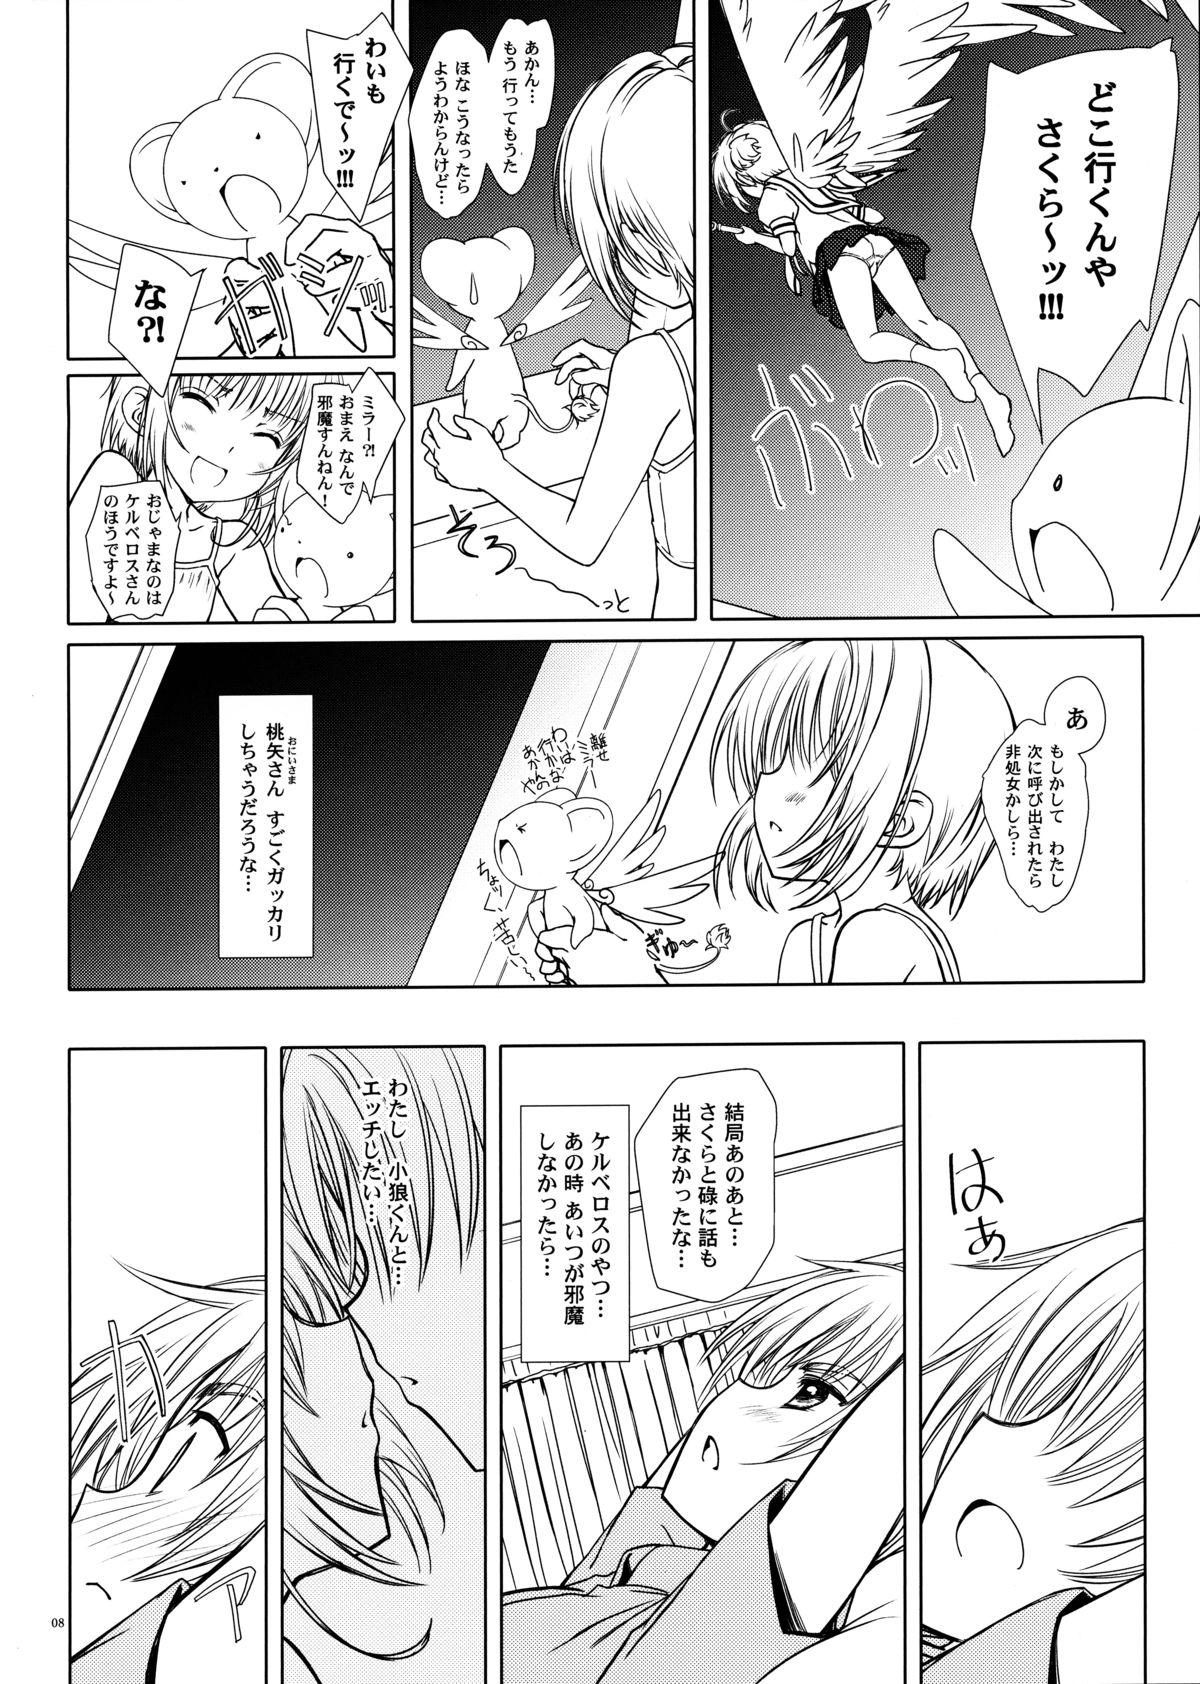 Skinny Magic of Love - Cardcaptor sakura Yanks Featured - Page 7